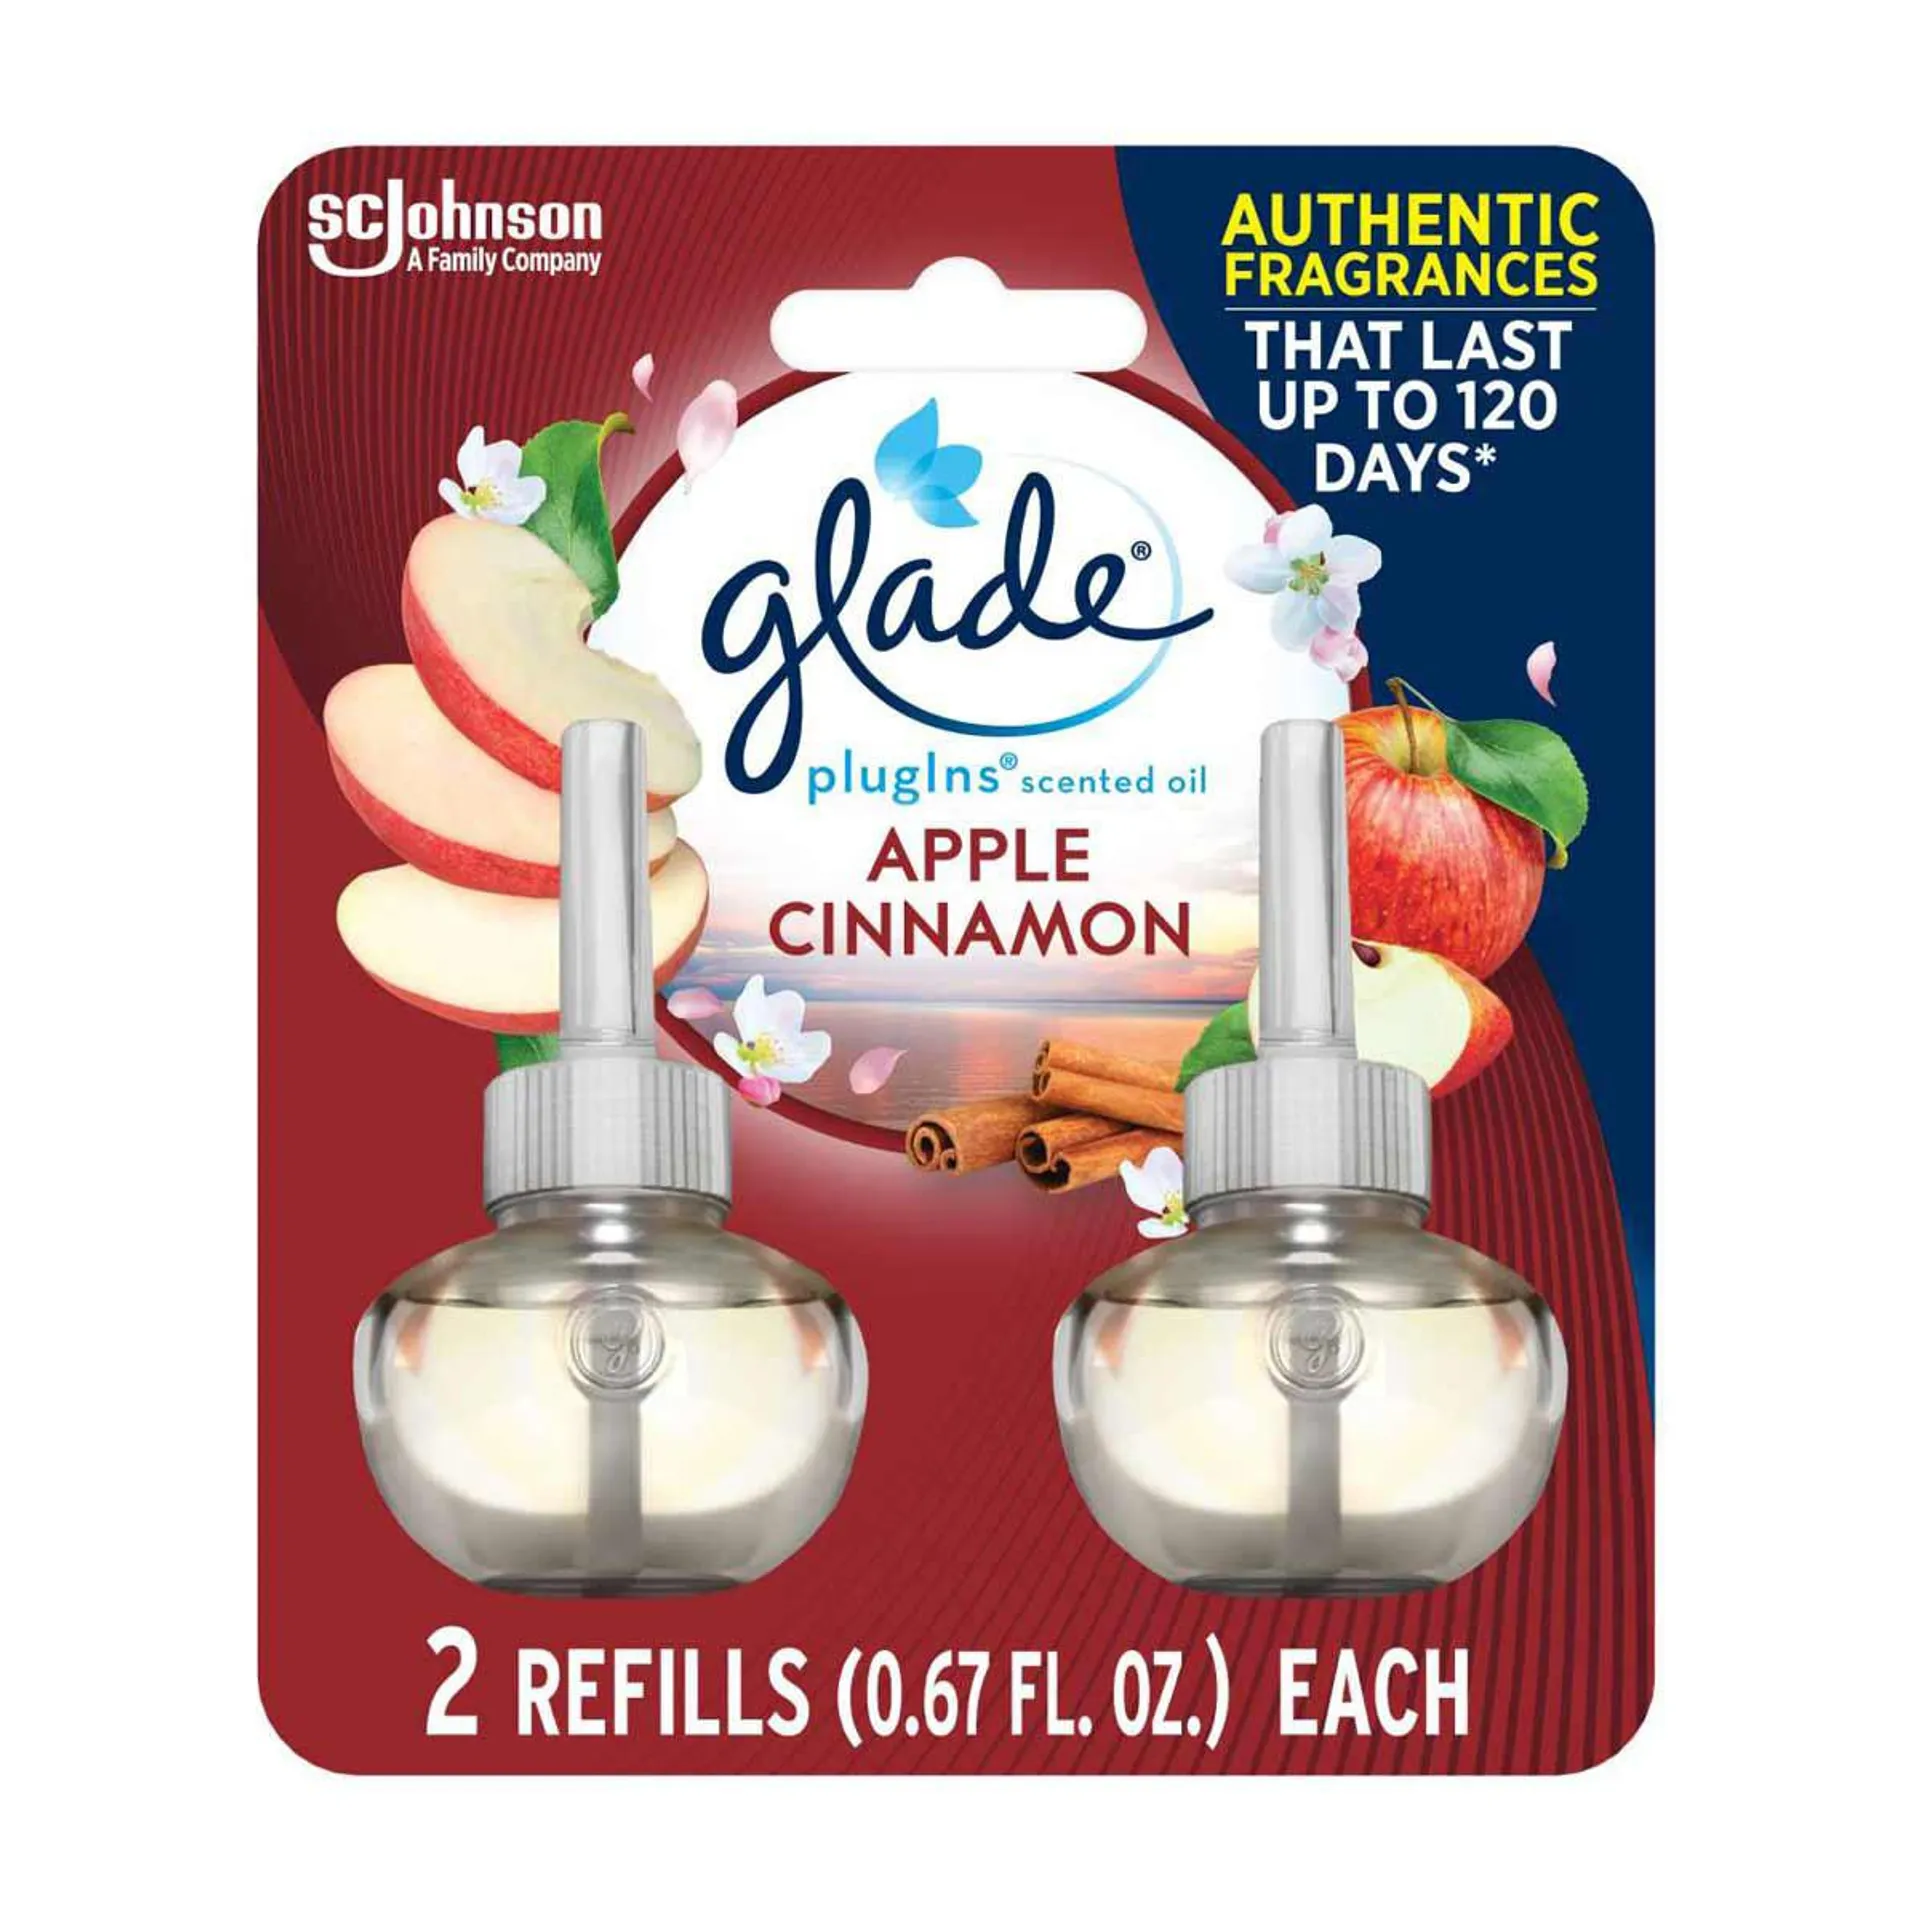 Glade Plugins Scented Oil 2 Refills, Air Freshener, Apple Cinnamon, 2 X 0.67 Oz